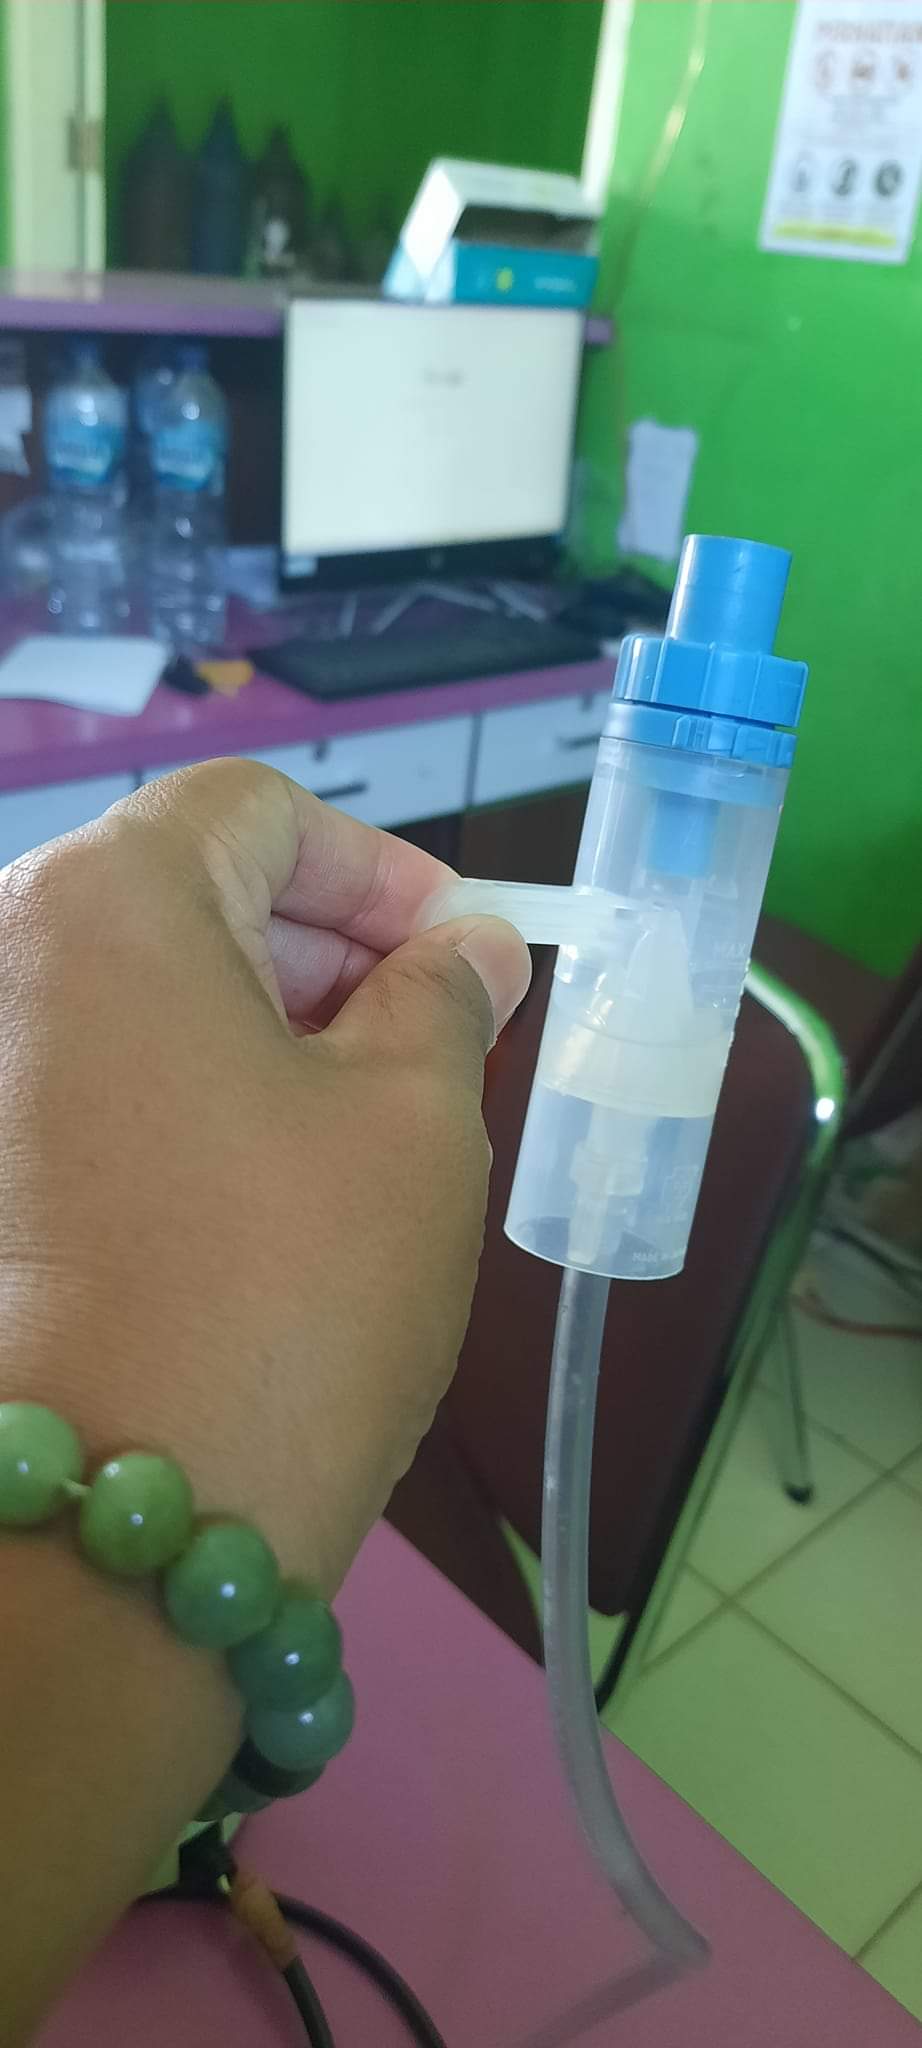 UGD UPT Puskesmas Tarusan  menerima pasien asma bronkial dalam serangan